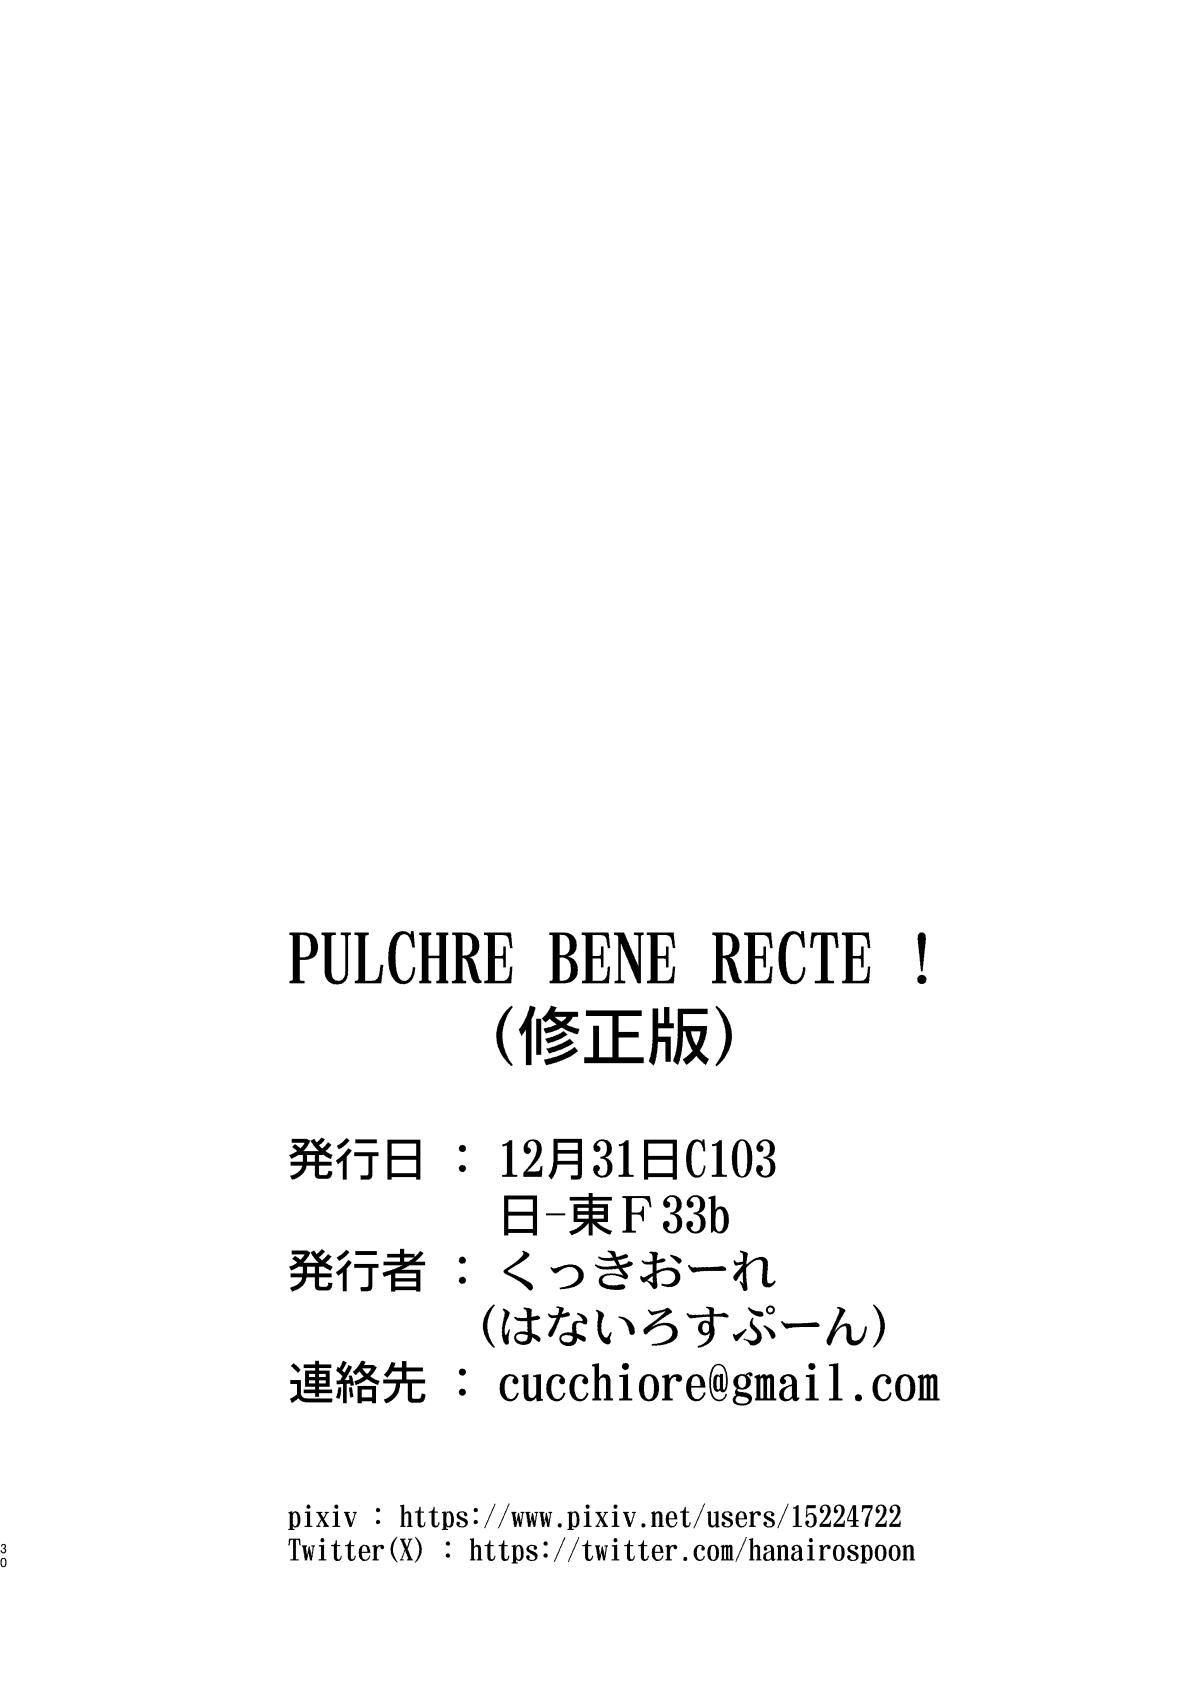 PULCHRE BENE RECTE! 31